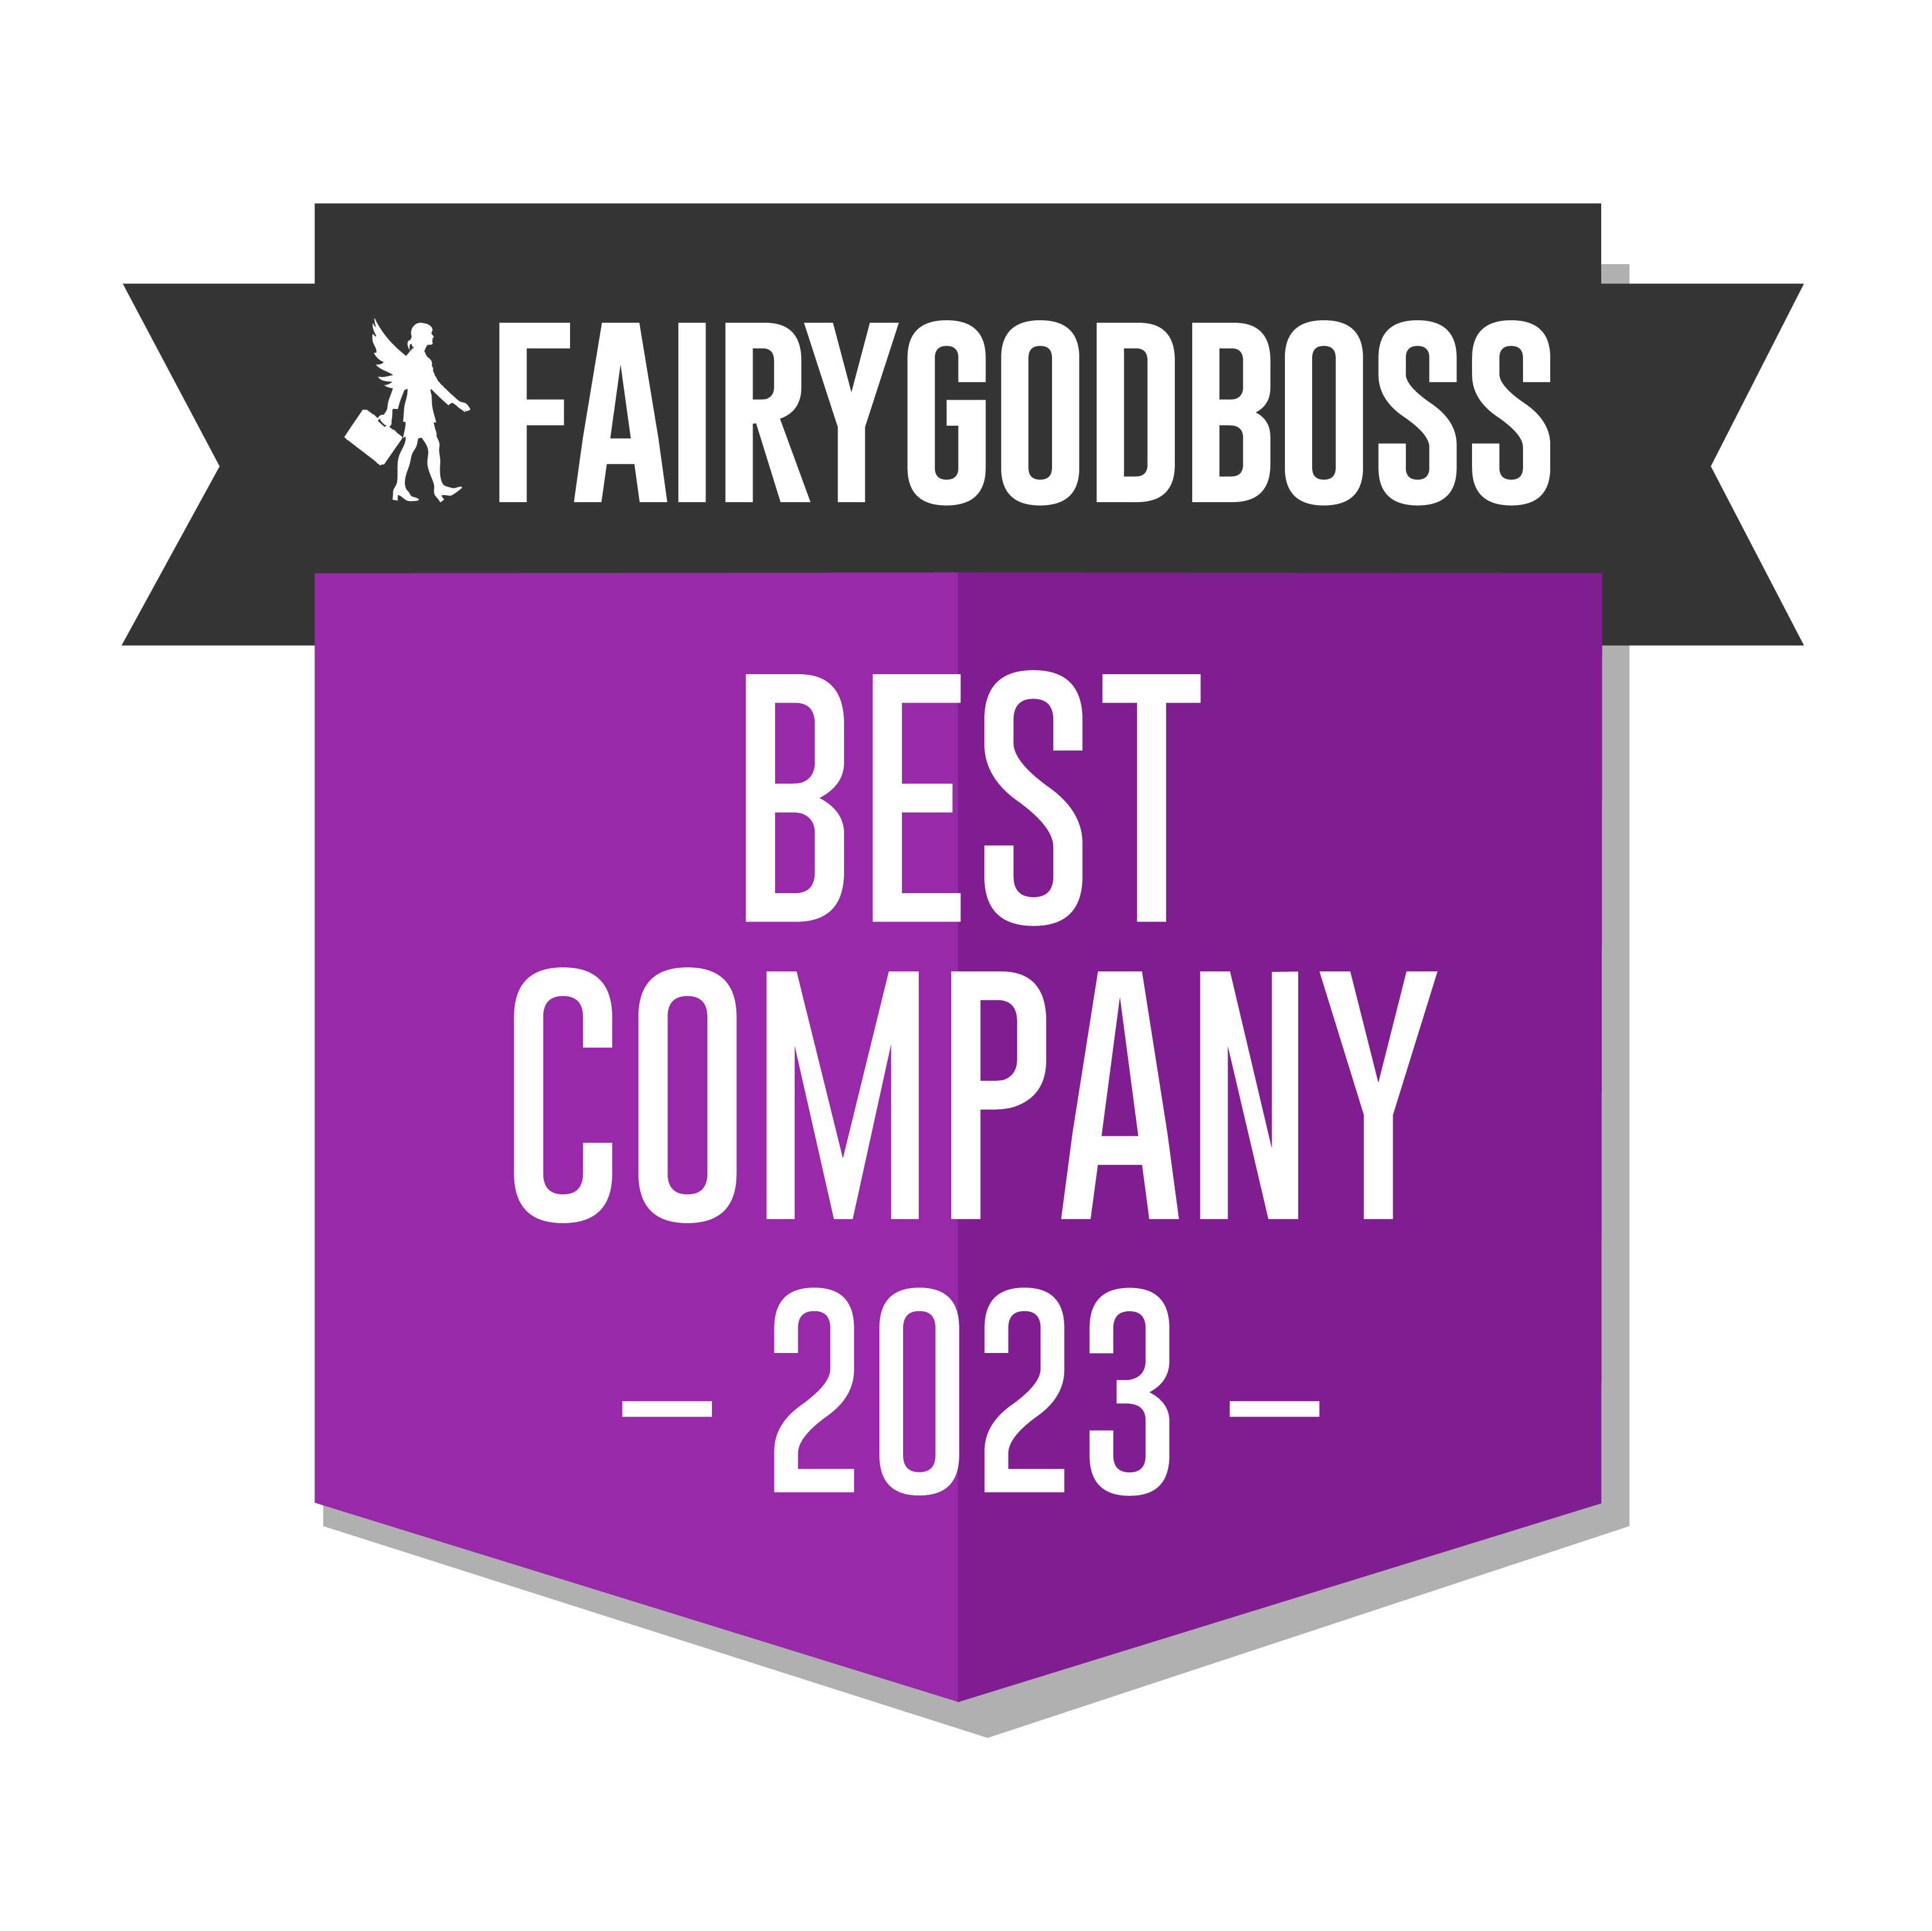 Best Company, FairyGodBoss